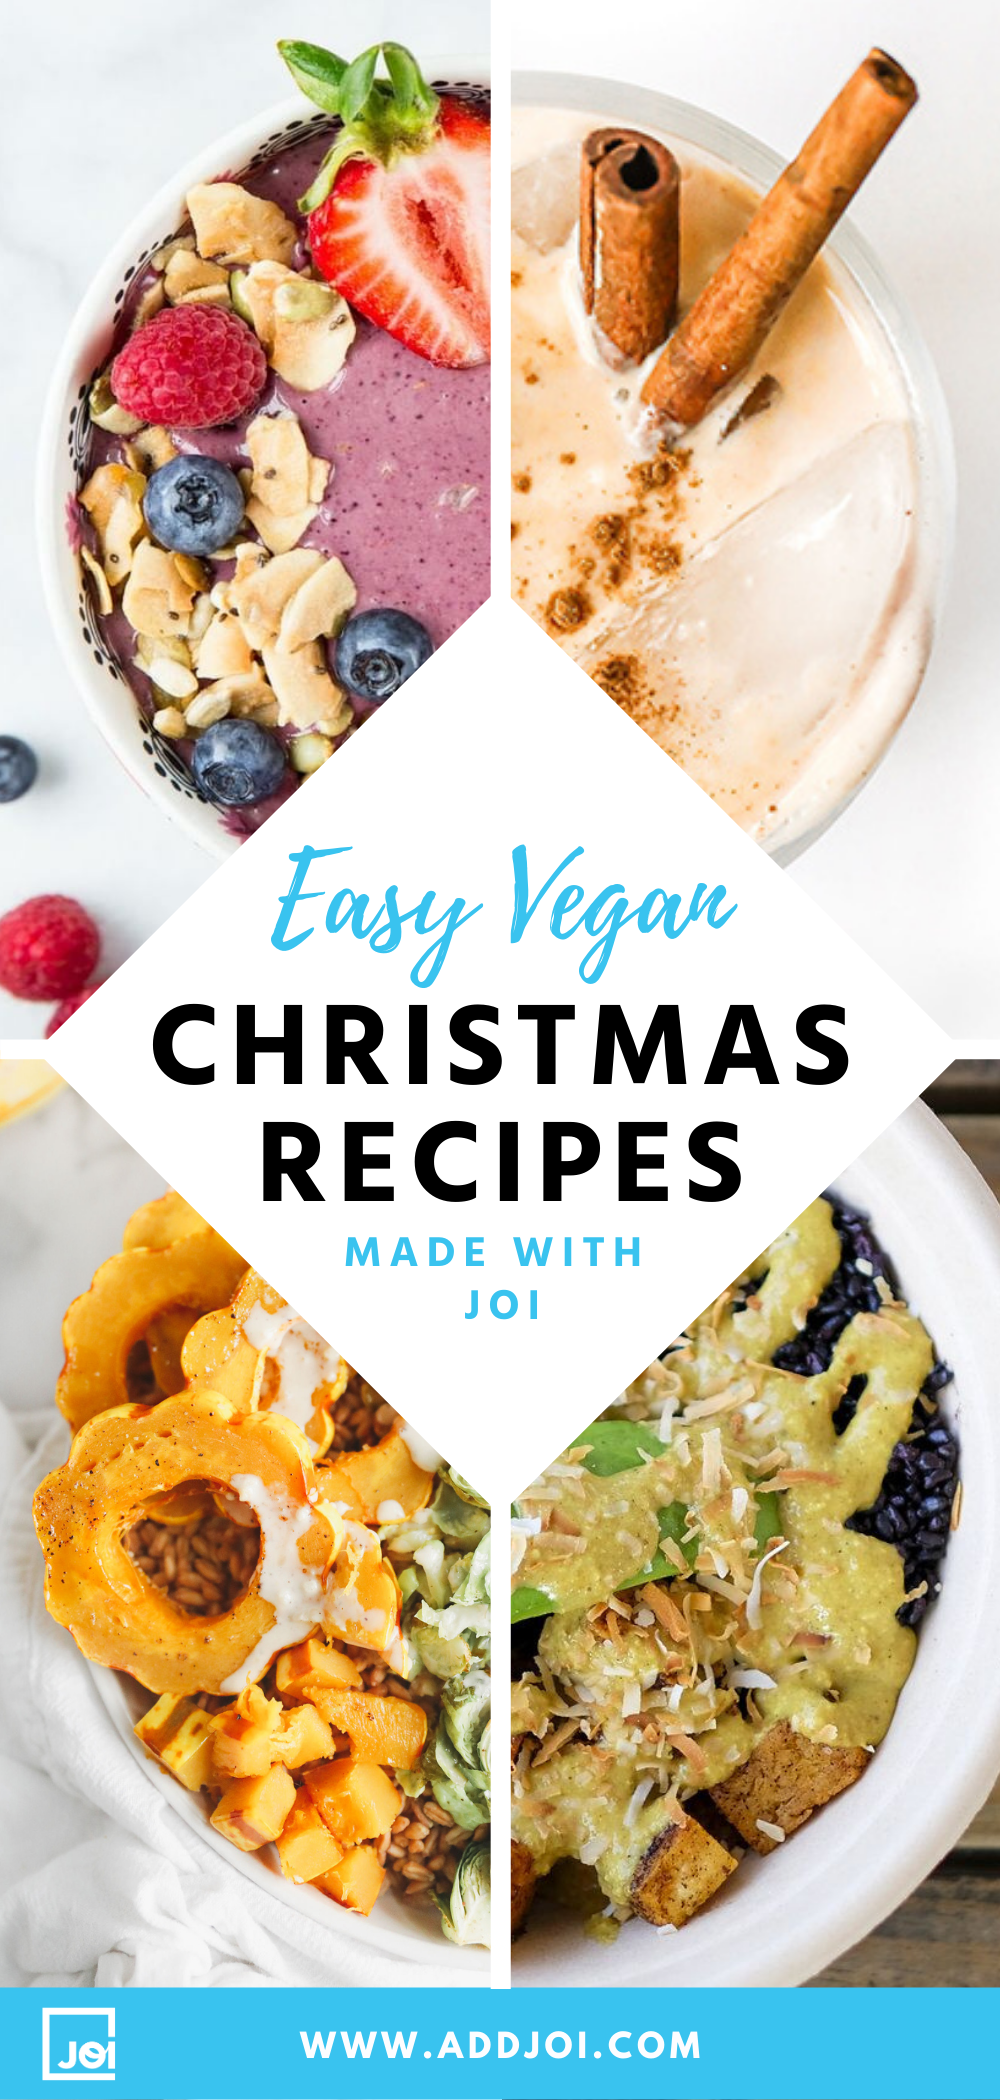 15 Easy and Delicious Recipes for a Vegan Christmas Menu 